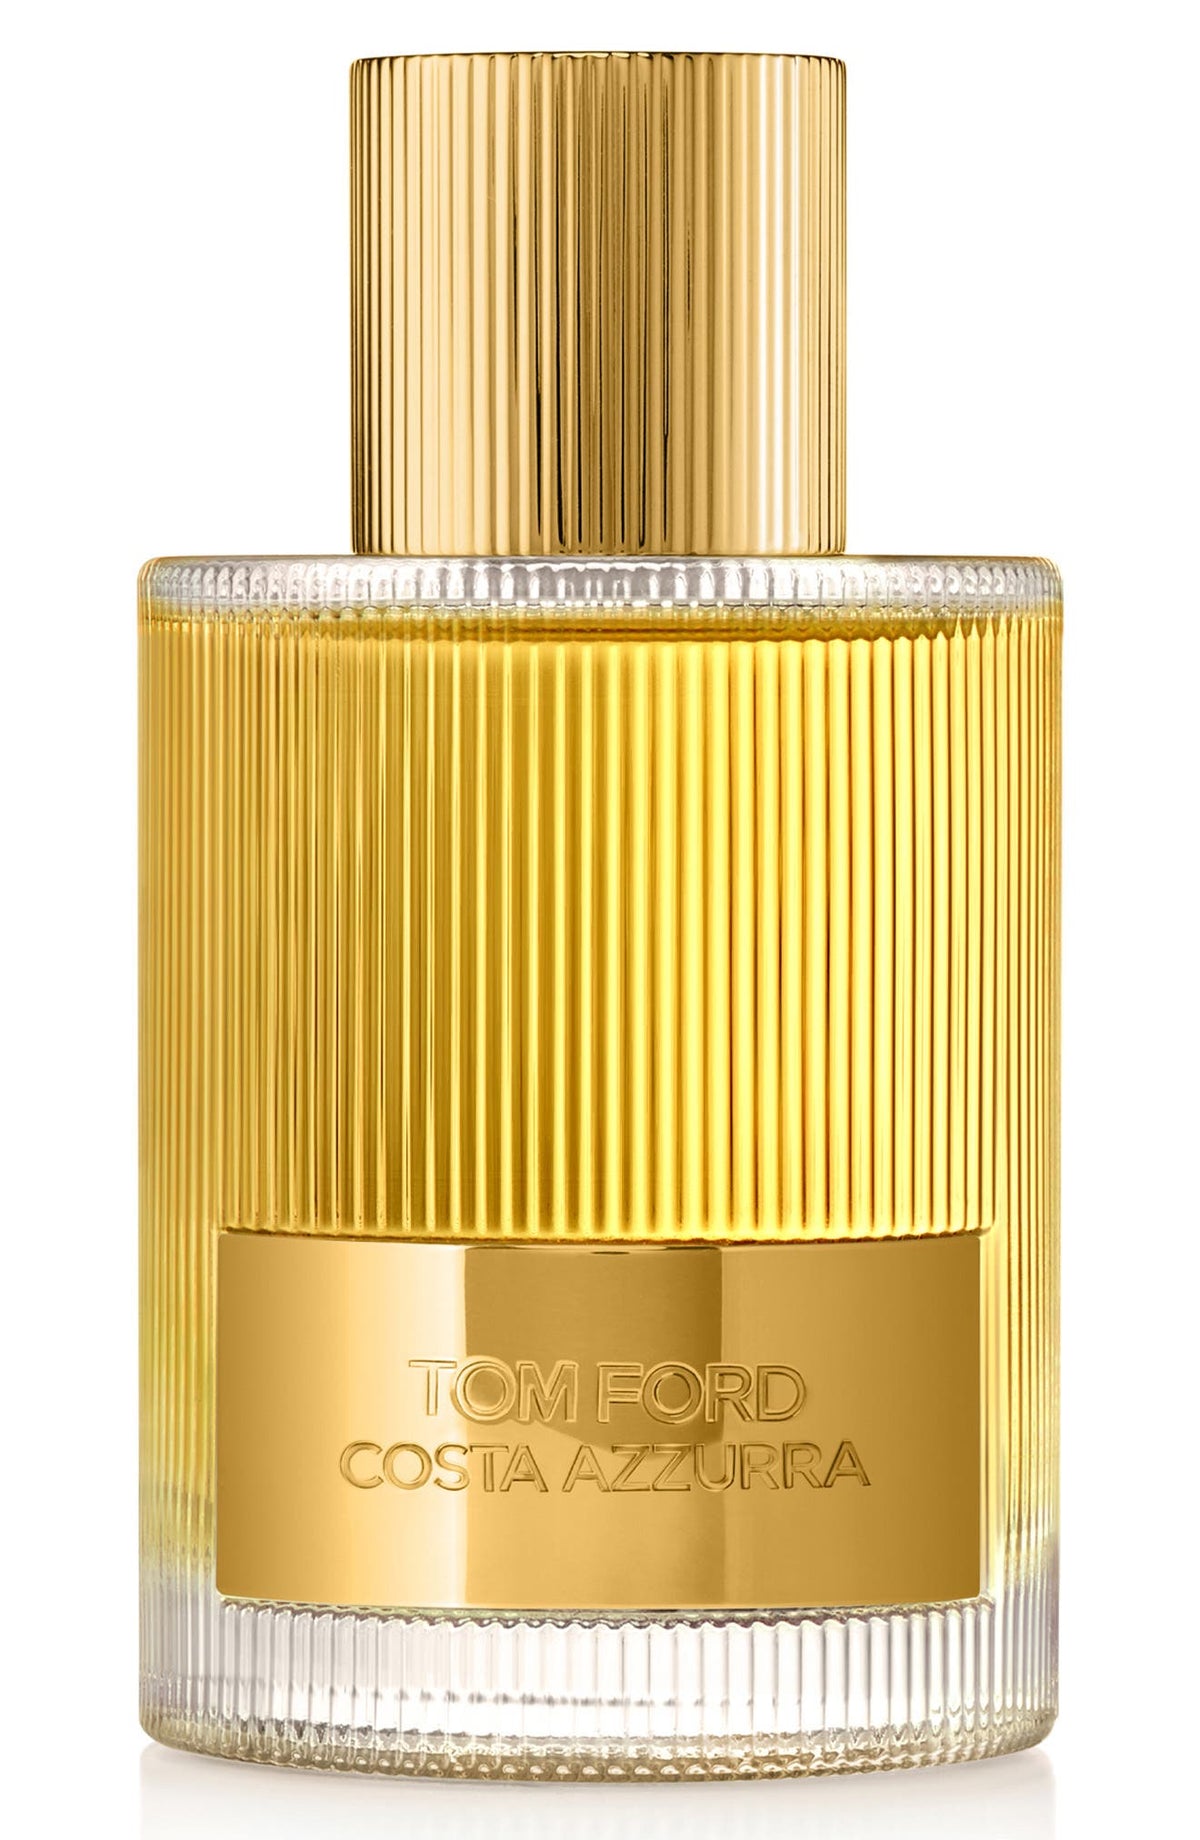 TOM FORD Costa Azzurra Eau de Parfum Spray 3.4 oz